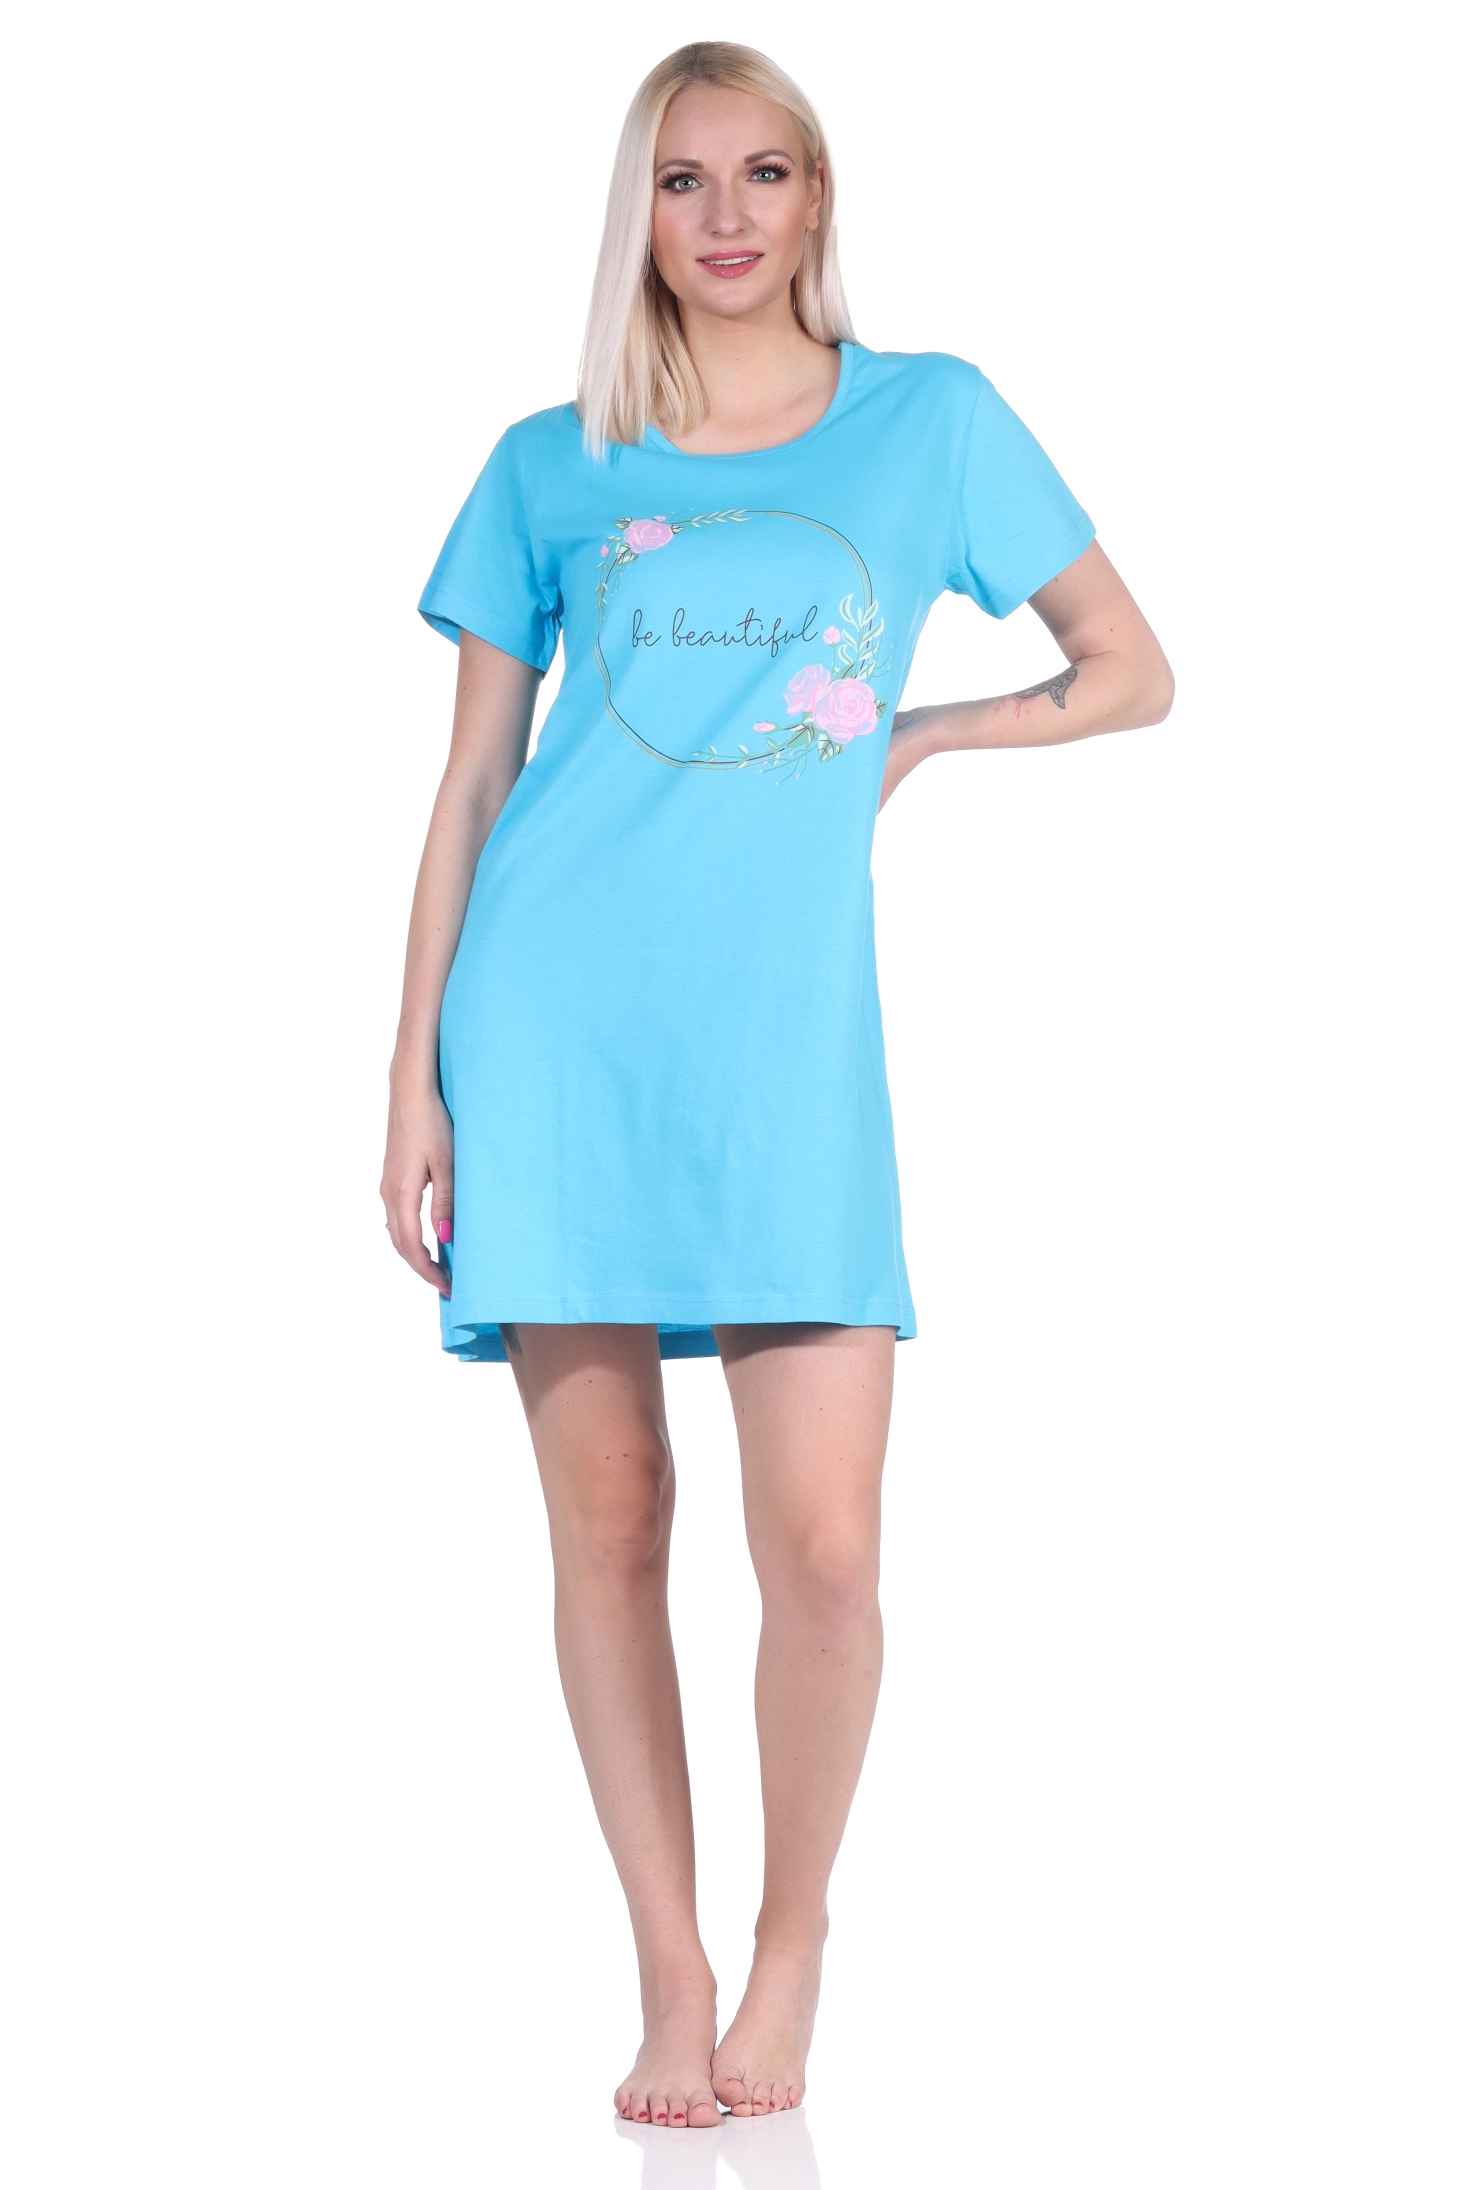 Damen 2er Pack kurzarm Nachthemd Schlafshirt in 2 tollen farbenfrohen Designs - 65137